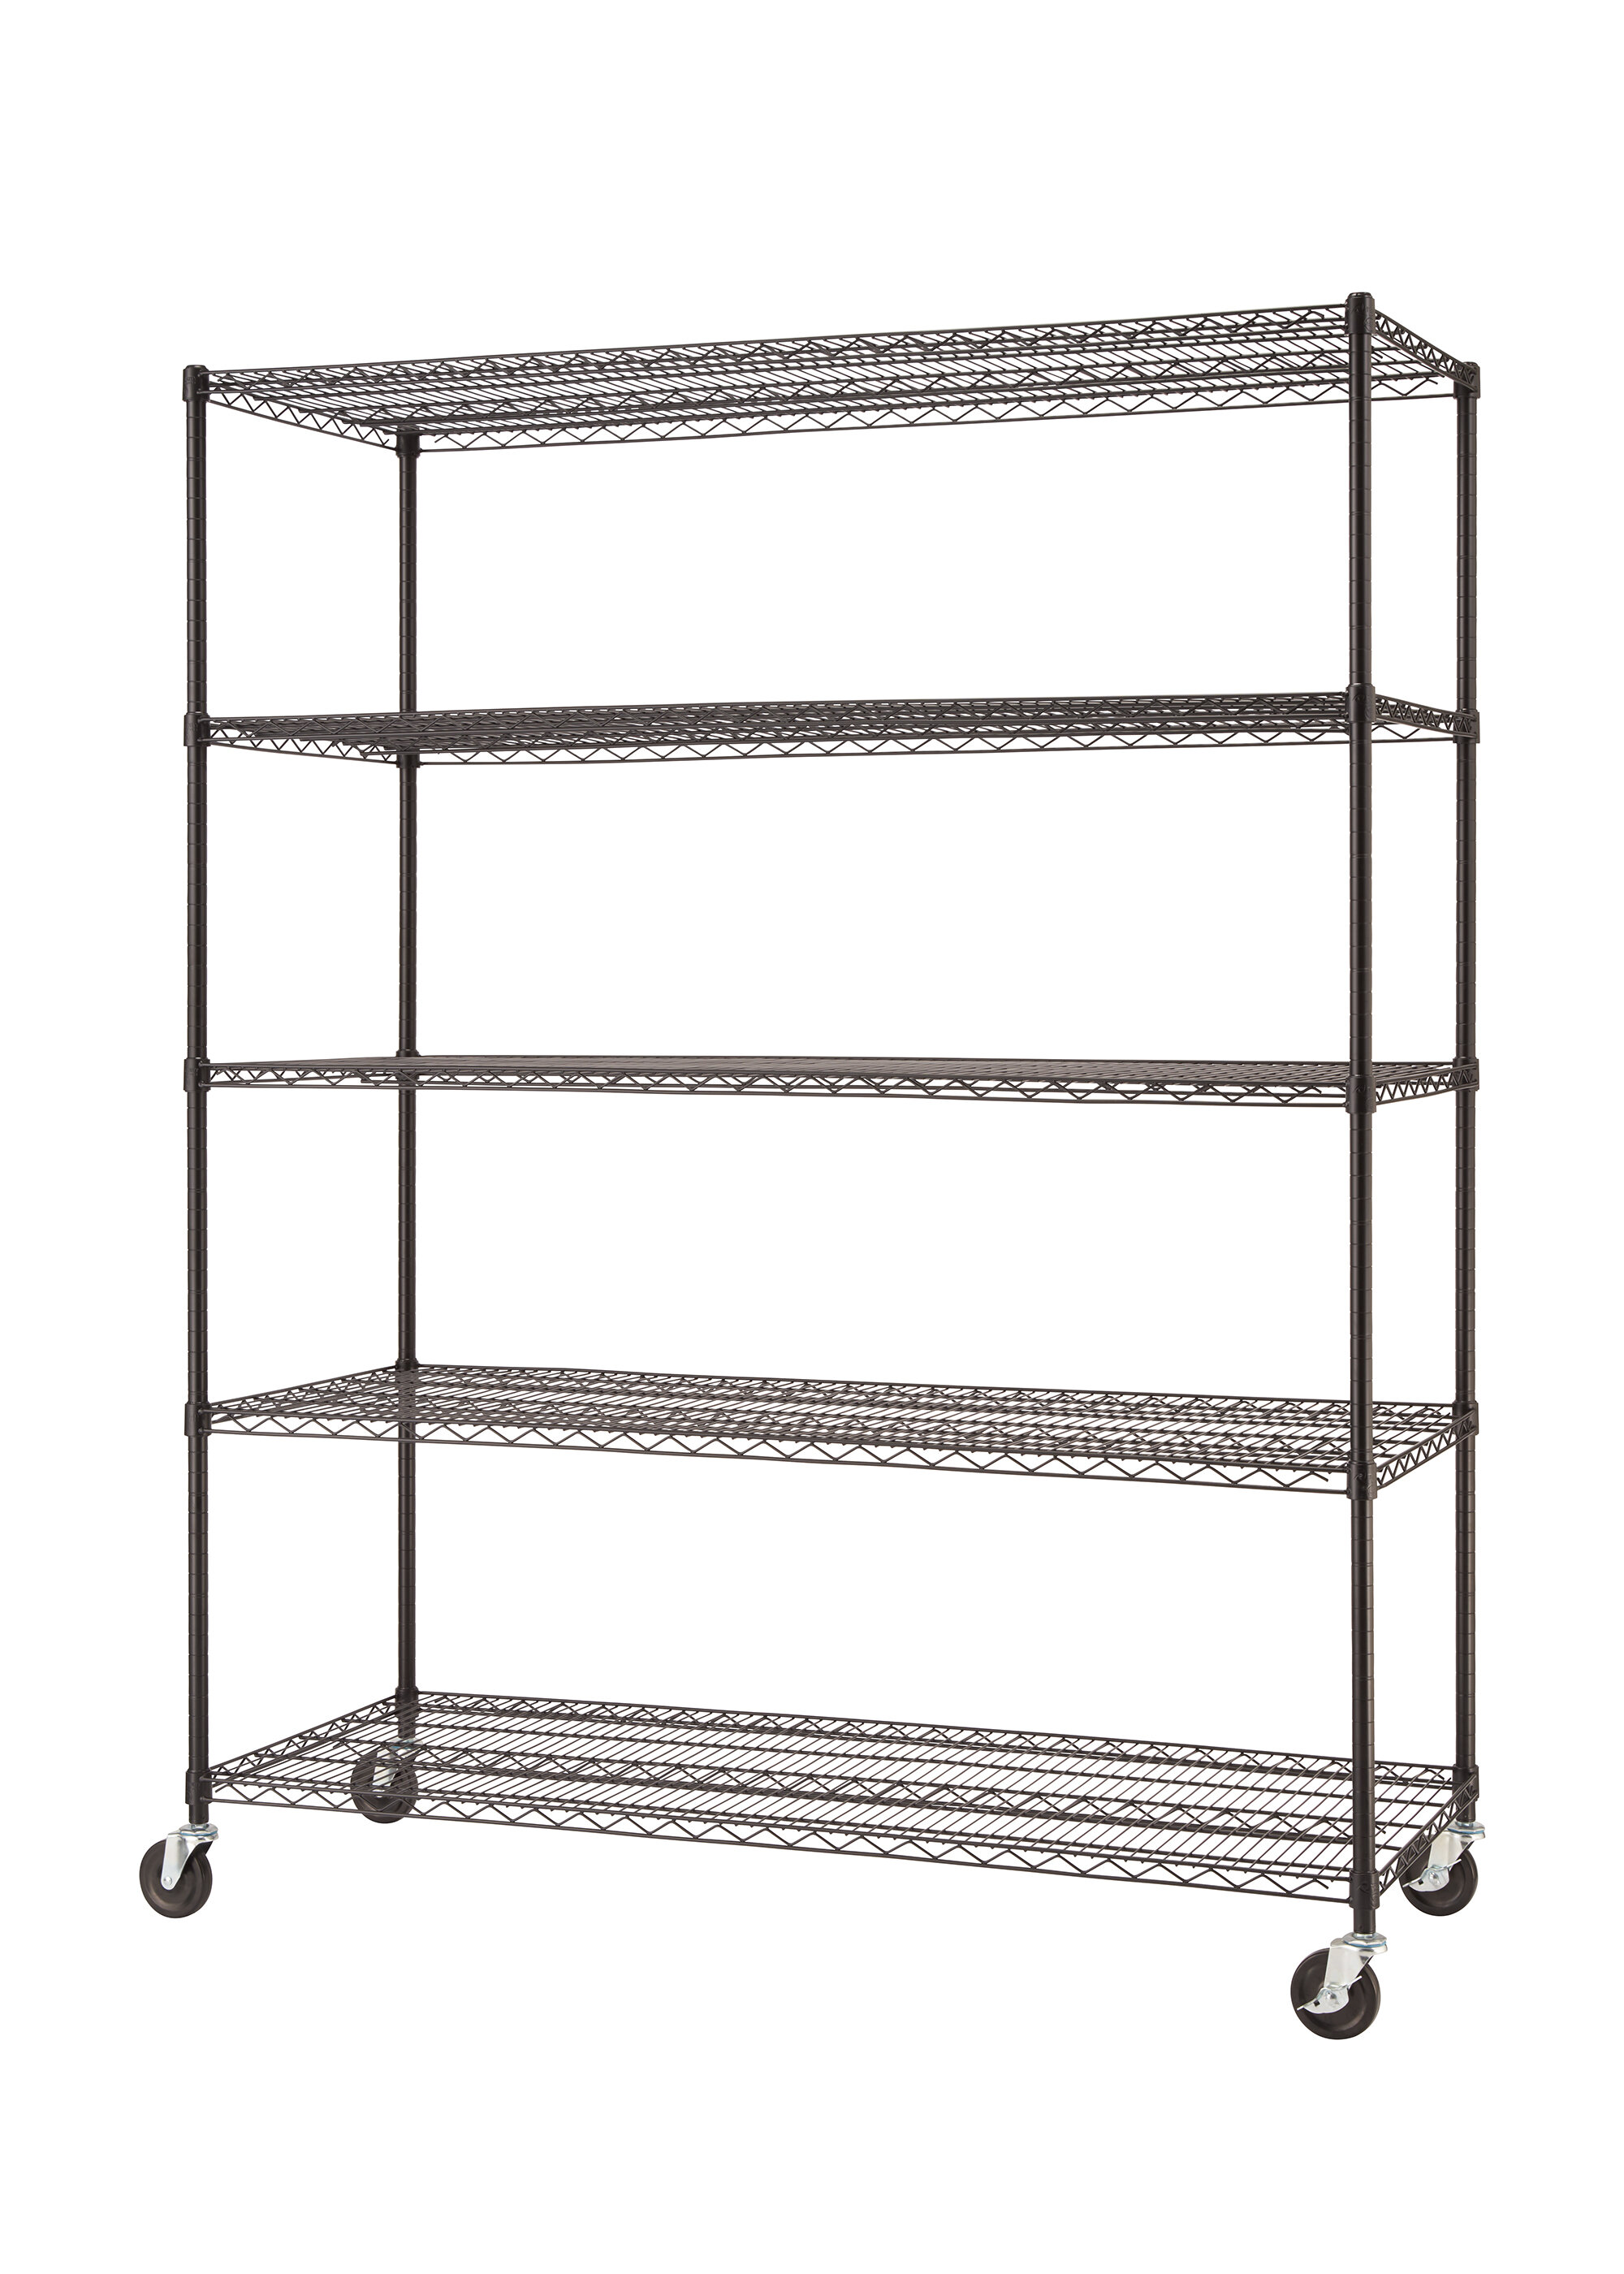 5 Tier Wire Shelving Rack Metal Shelf Adjustable Unit Garage Home Kitchen Black 